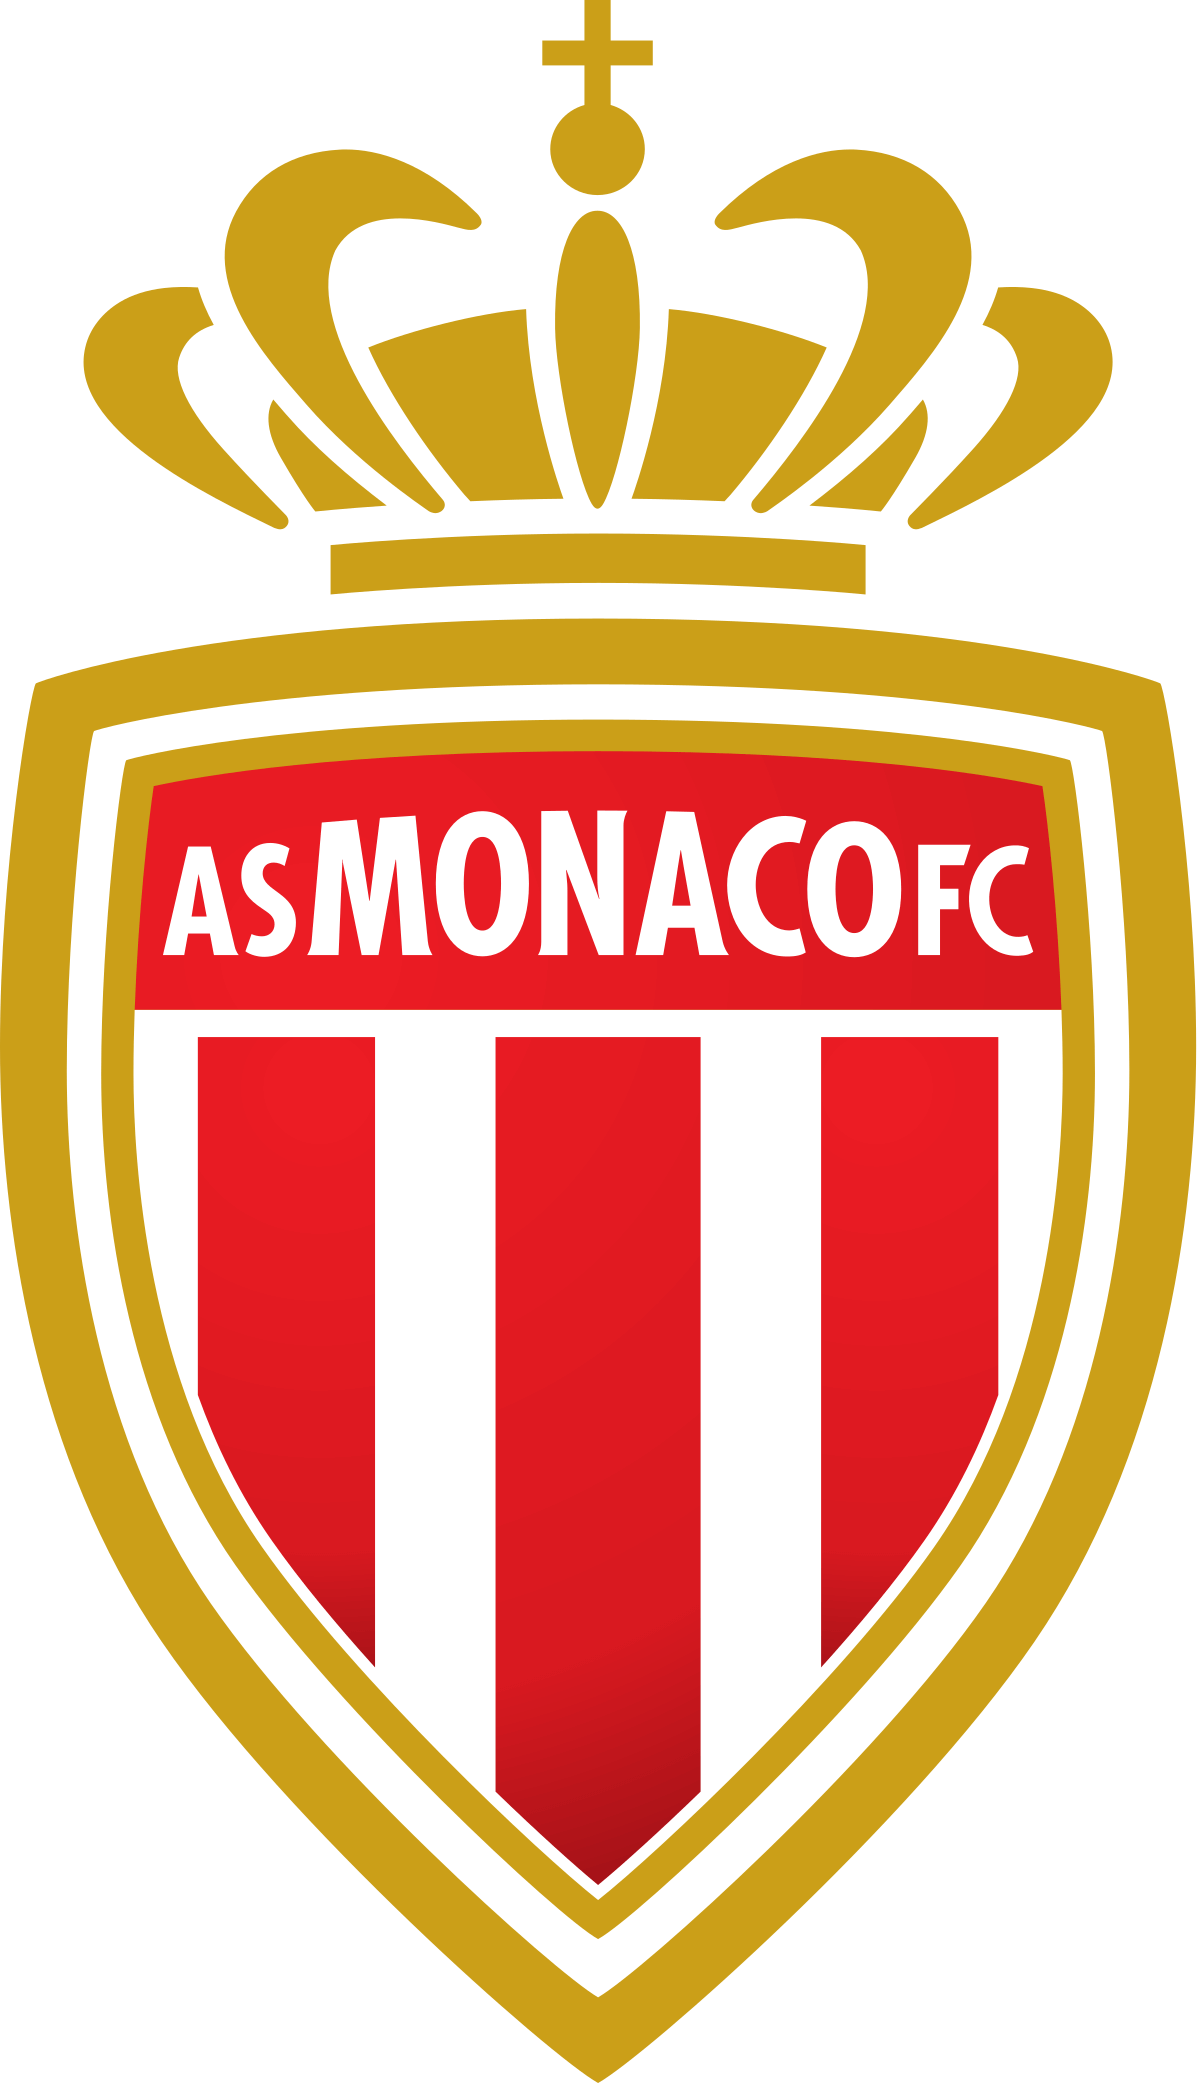 Paris 2018 Logo - Paris Saint-Germain vs AS Monaco 21/04/2019 | Football Ticket Net